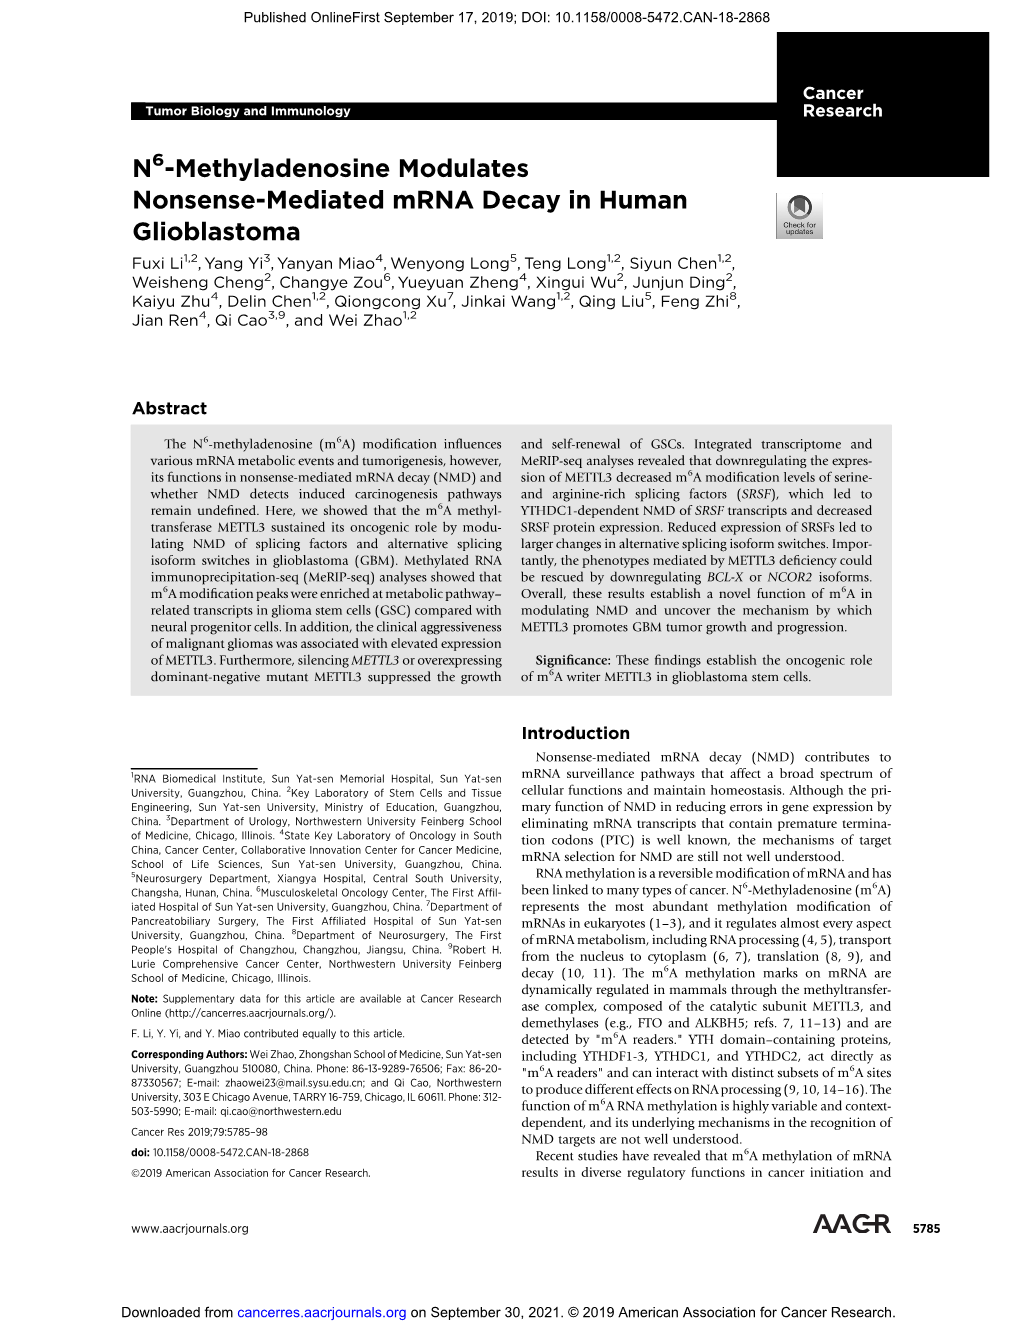 N -Methyladenosine Modulates Nonsense-Mediated Mrna Decay